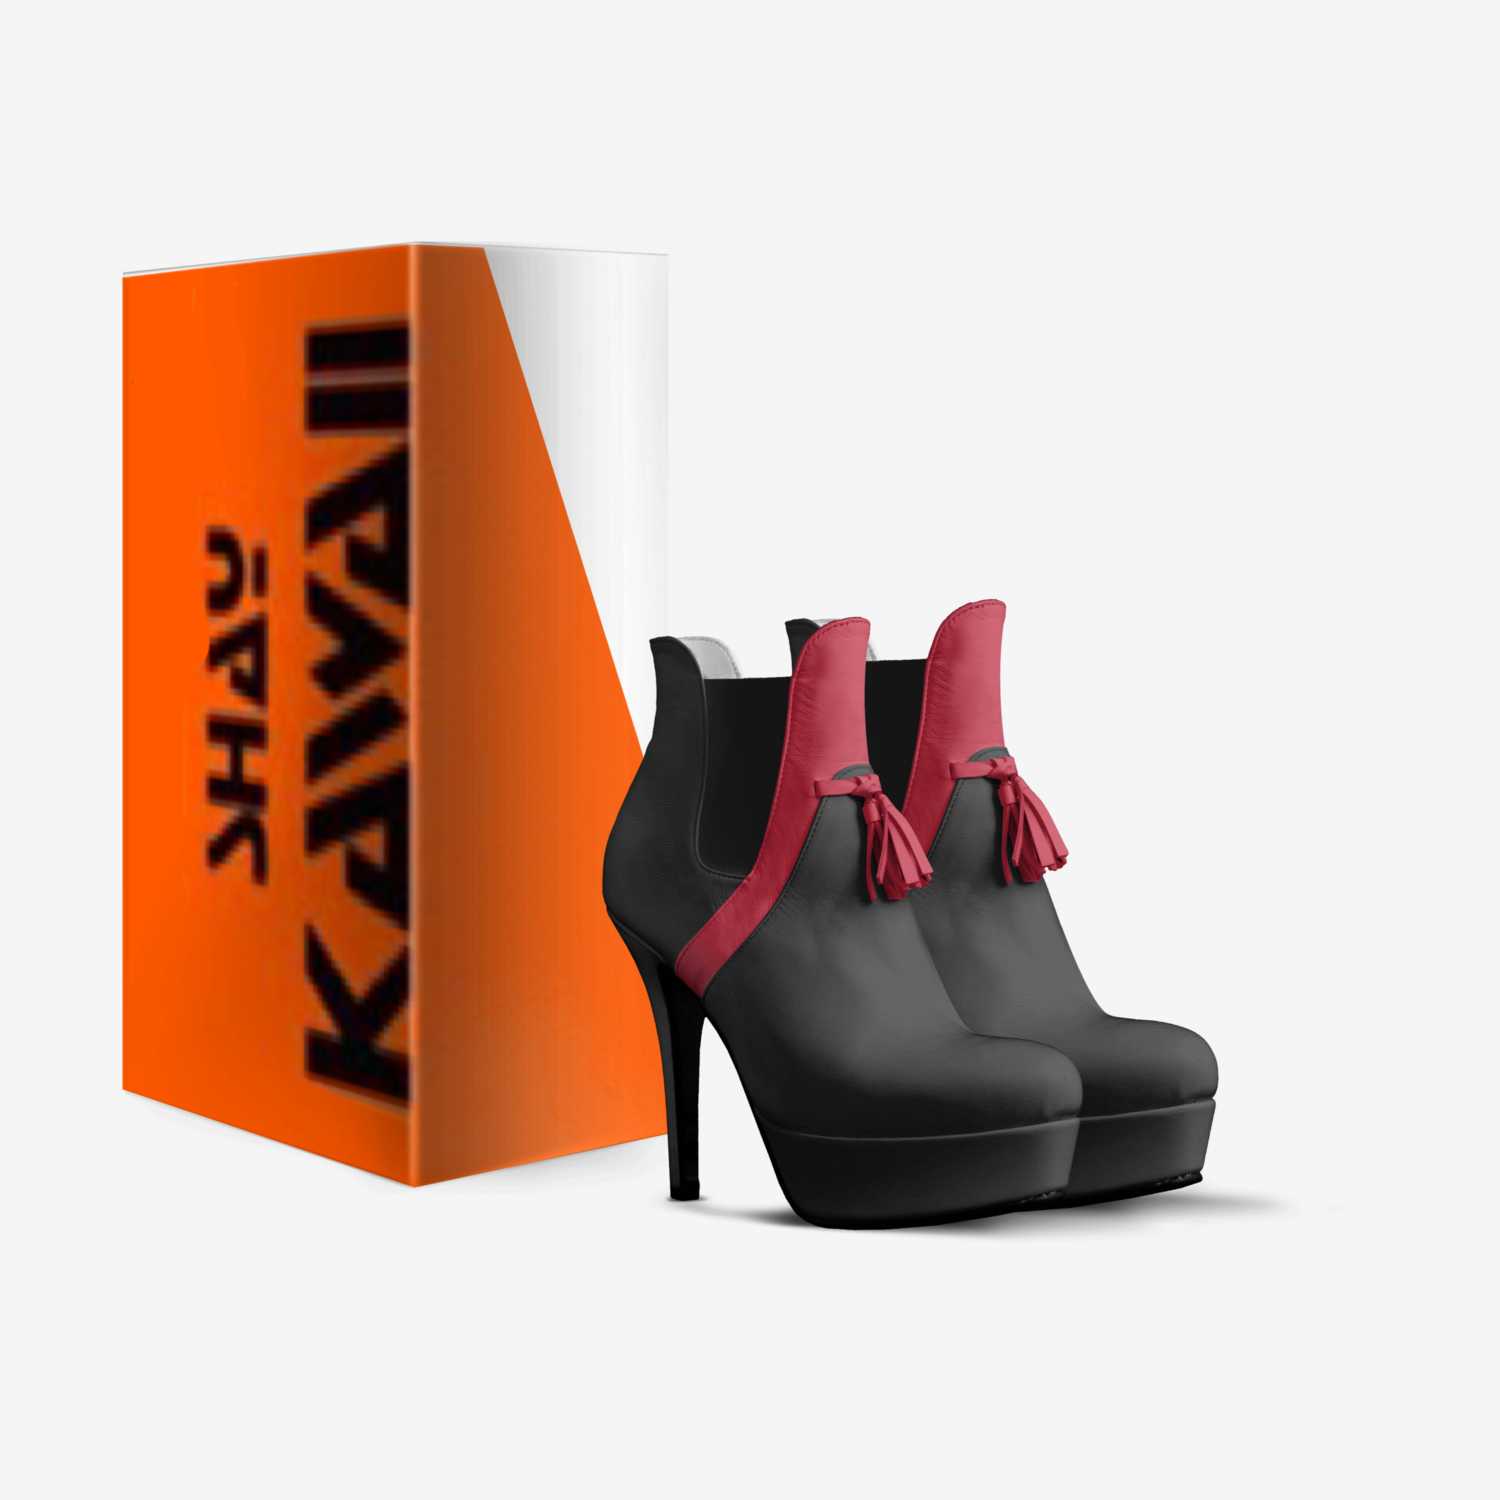 Shay kawaii 1000 custom made in Italy shoes by Kvn Elvn | Box view